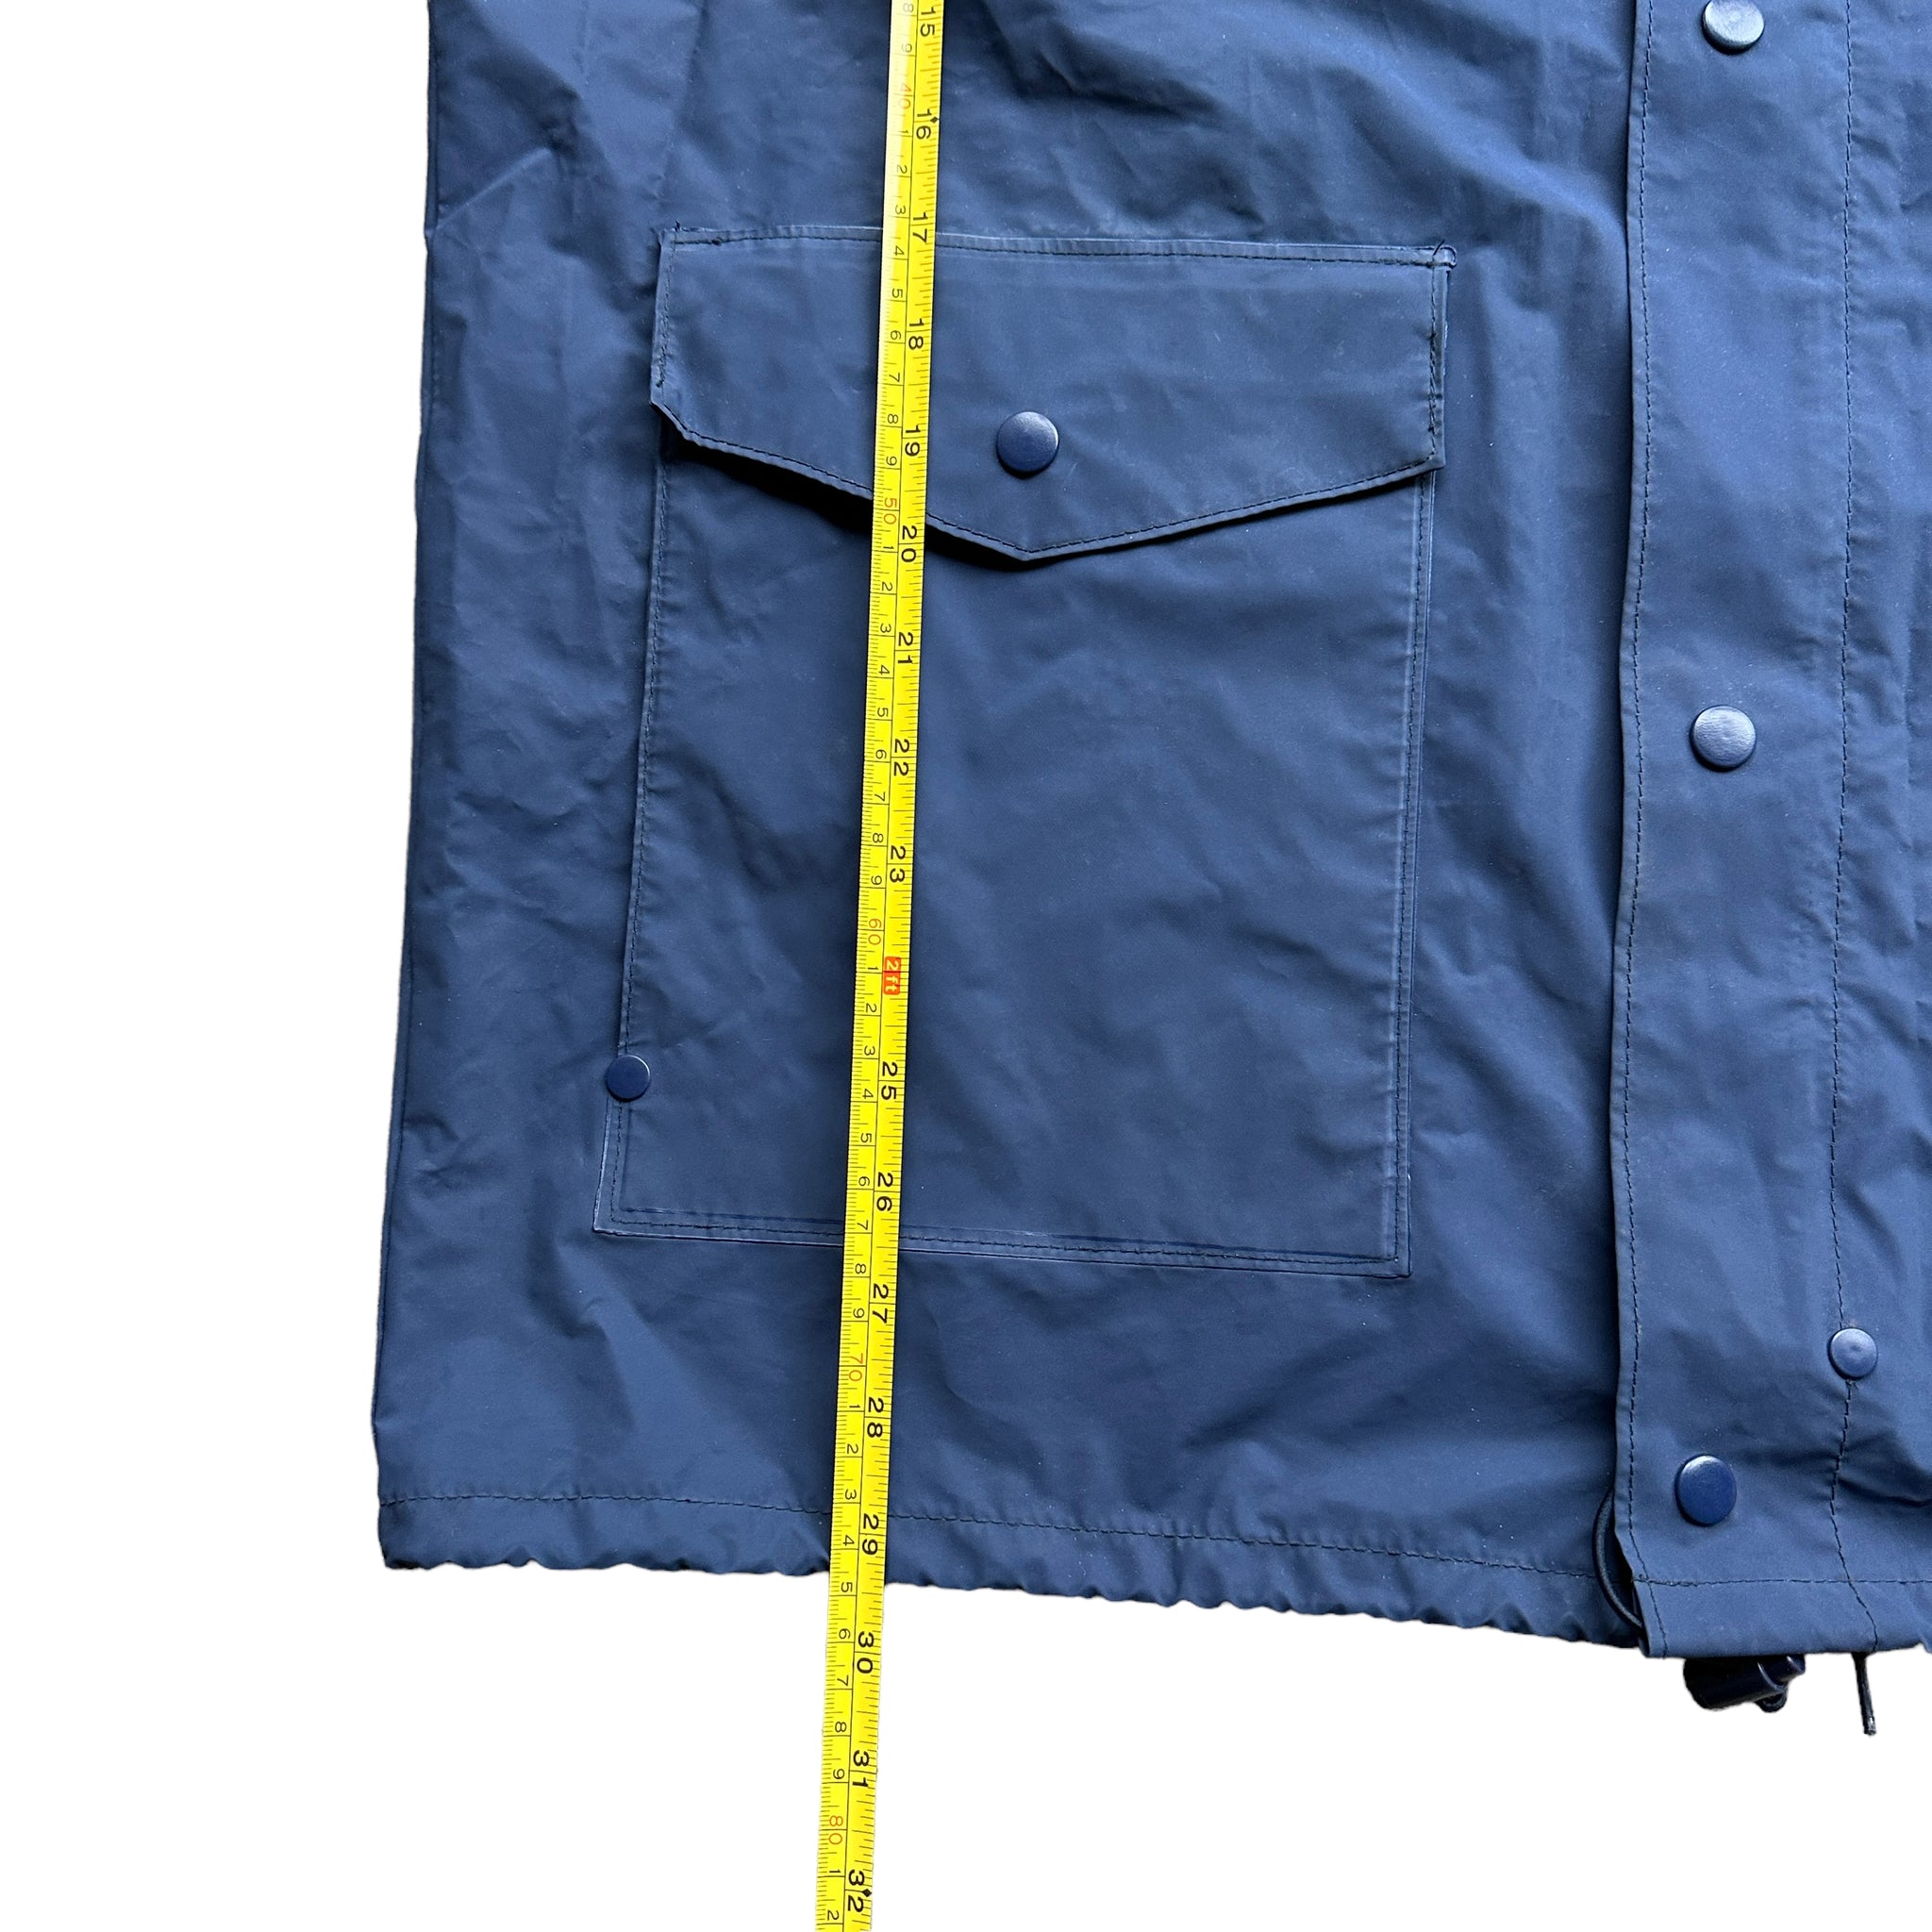 90s Columbia rain jacket medium